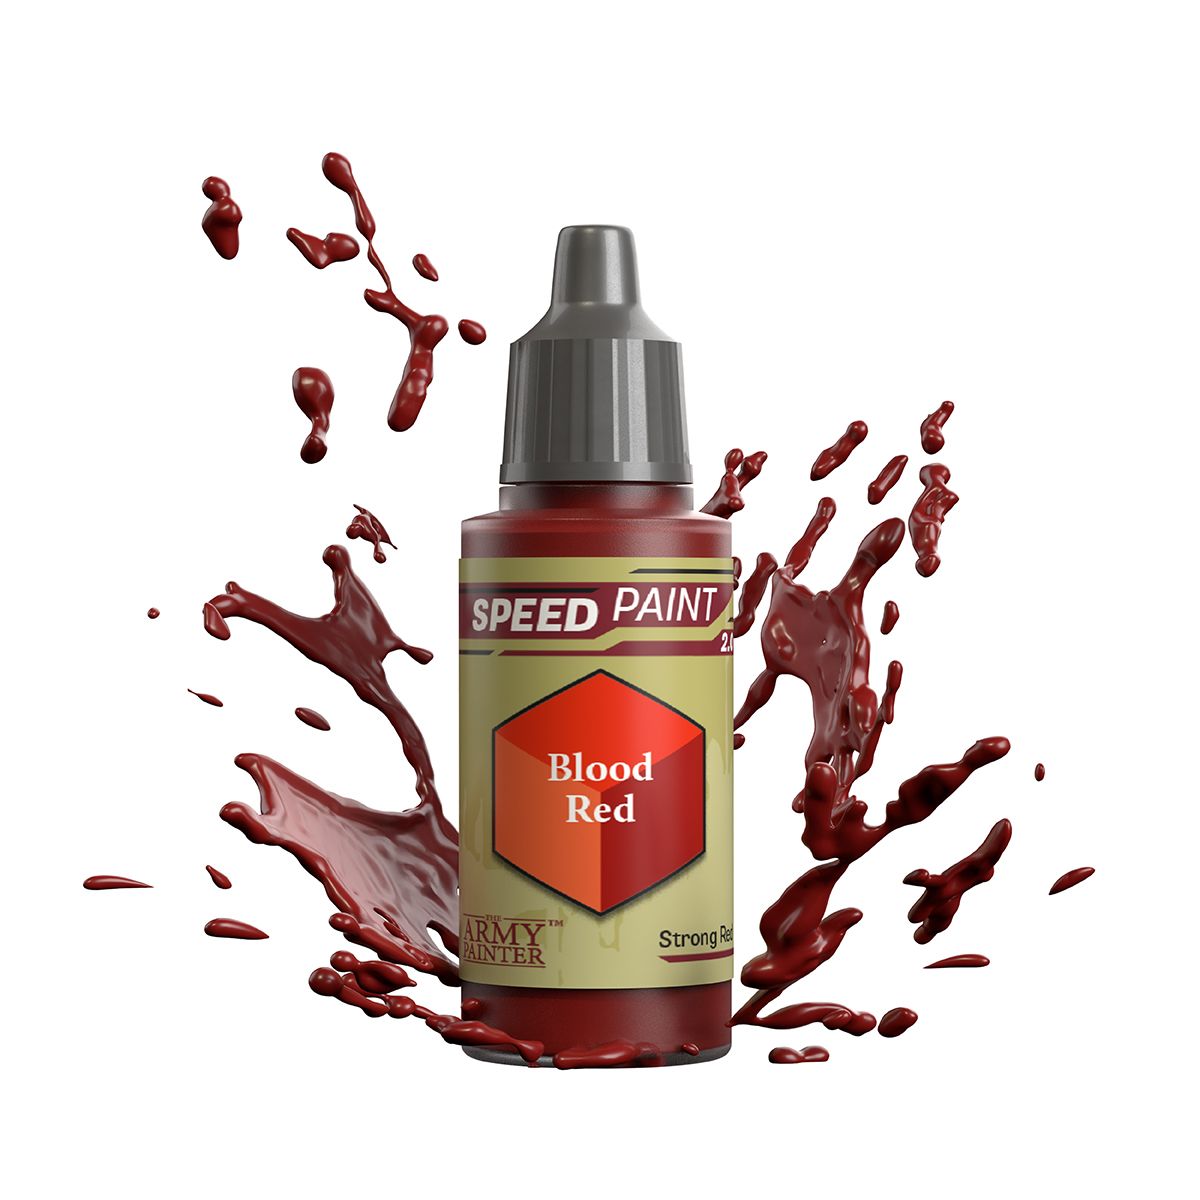 blood red paint bottle